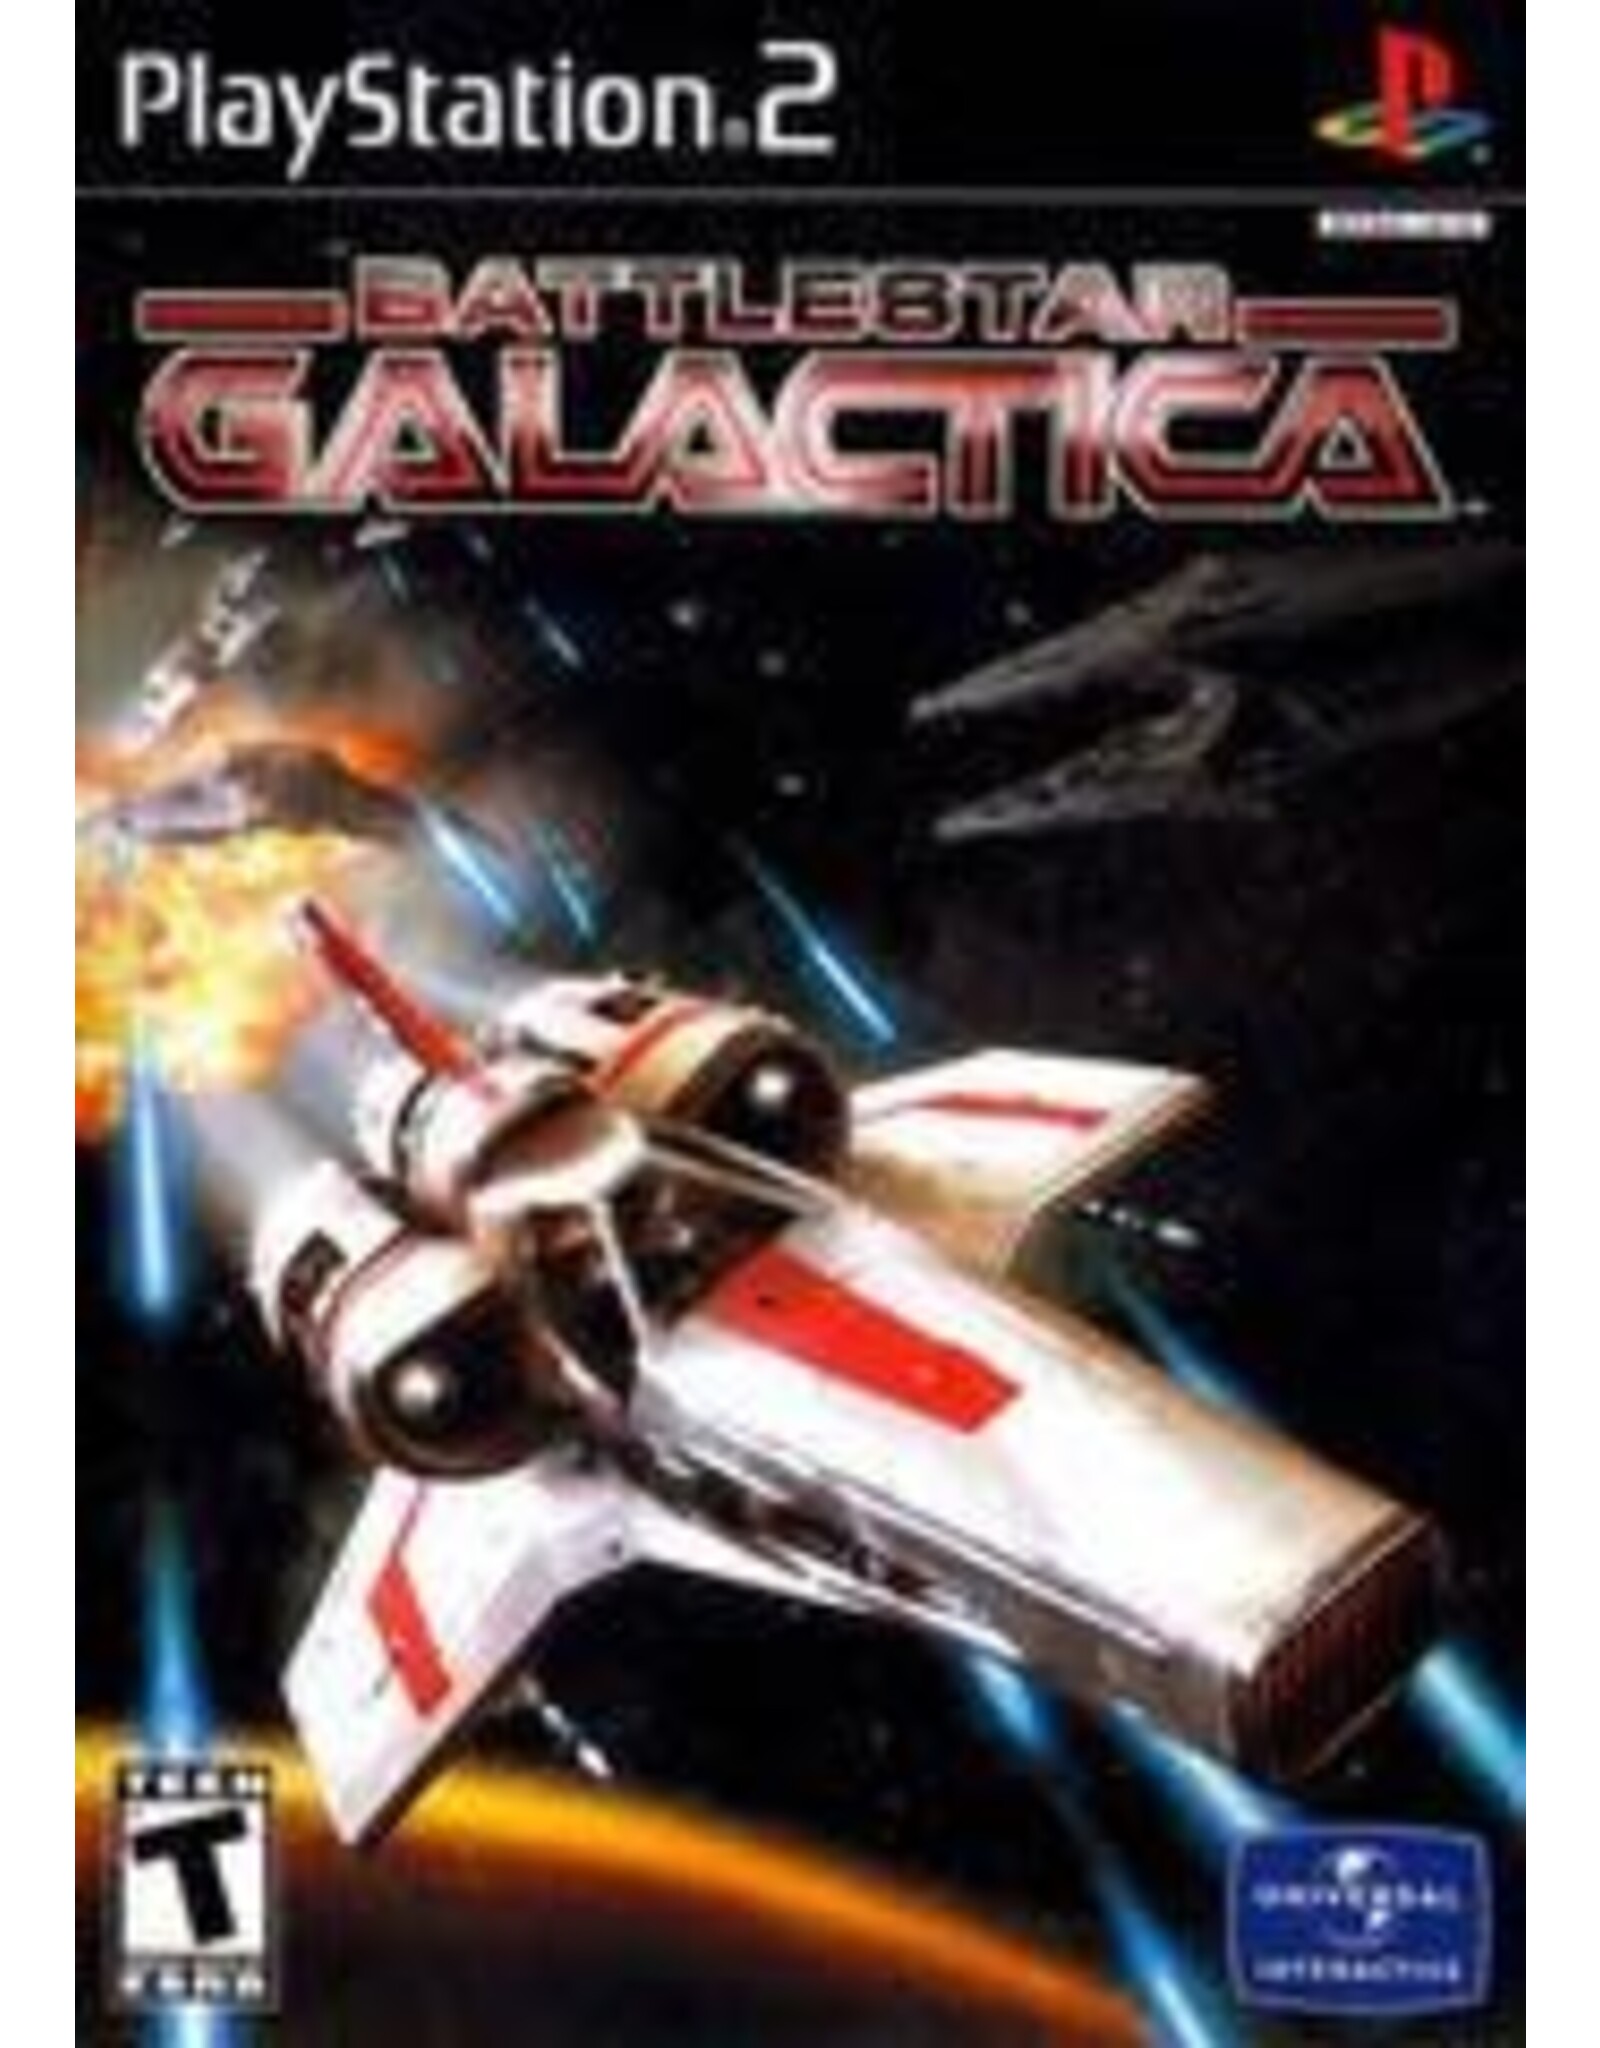 Playstation 2 Battlestar Galactica (No Manual, Damaged Sleeve)